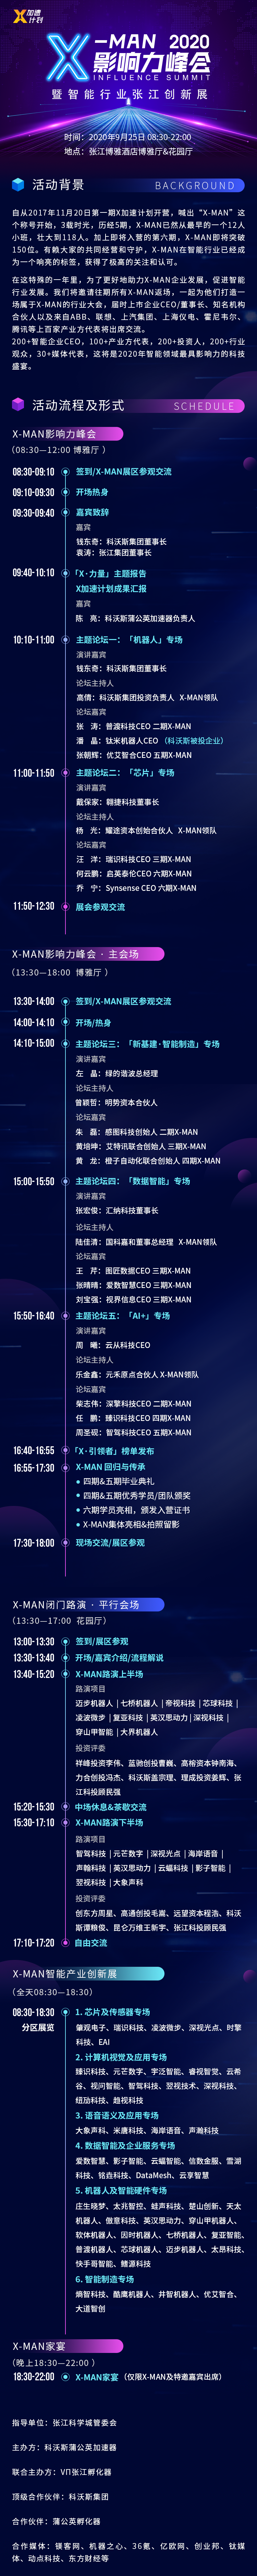 2020 X-MAN 影响力峰会暨智能行业张江创新展